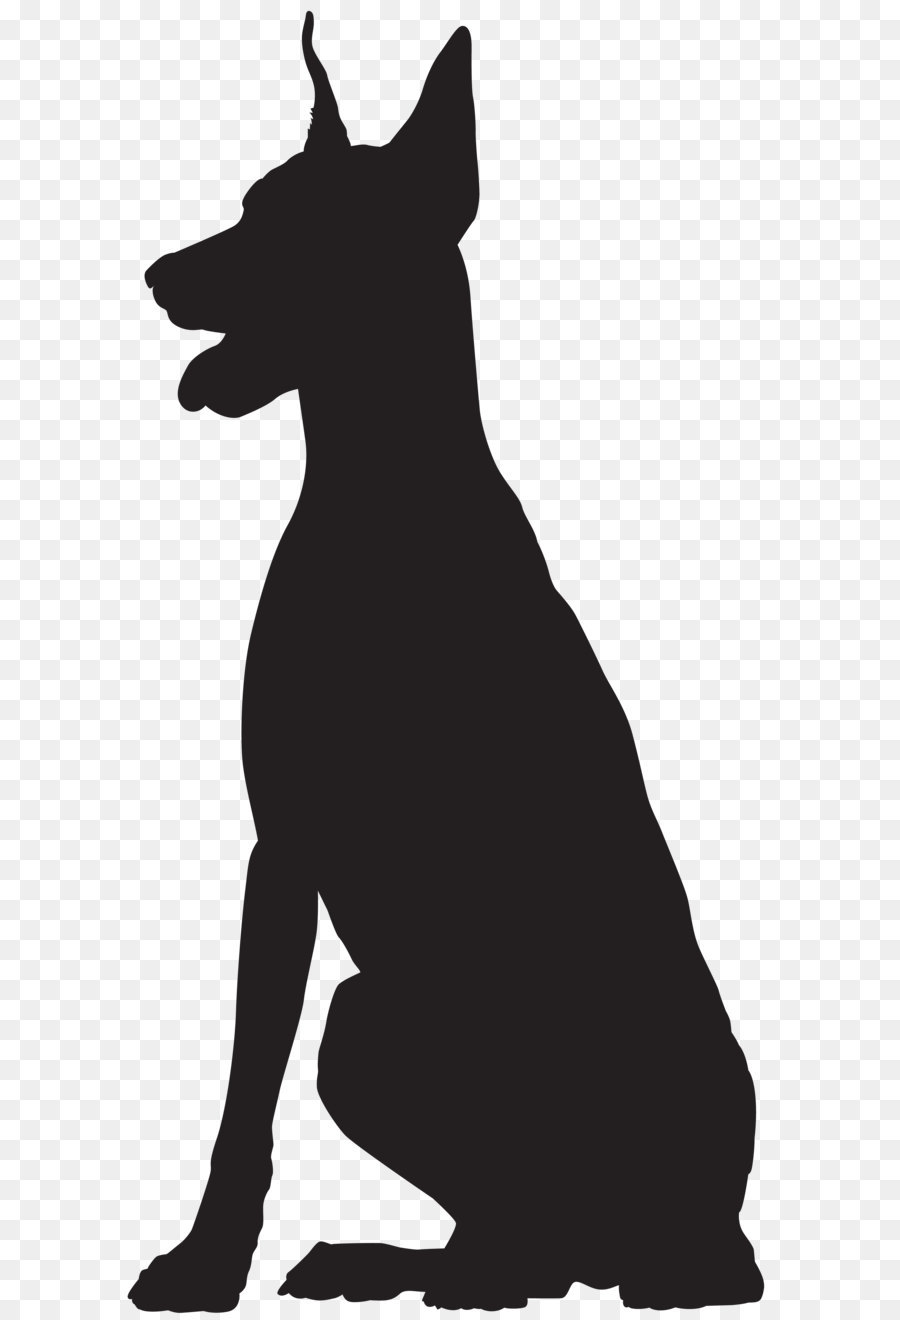 Dog breed Black and white Snout - Doberman Silhouette PNG Clip Art Image png download - 3948*8000 - Free Transparent Dobermann png Download.